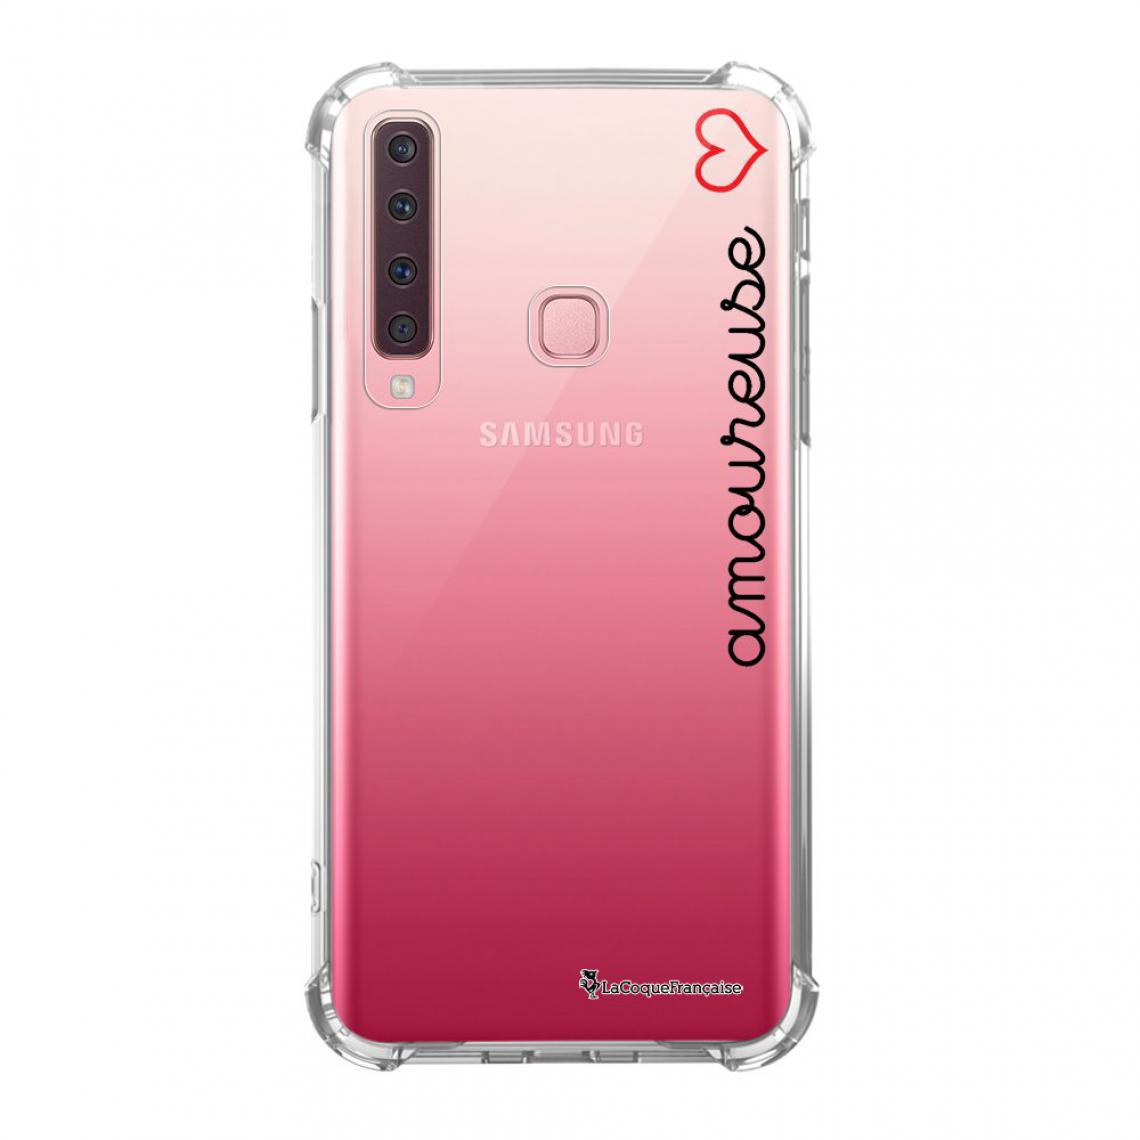 La Coque Francaise - Coque Samsung Galaxy A9 2018 silicone anti-choc souple angles renforcés transparente - Coque, étui smartphone